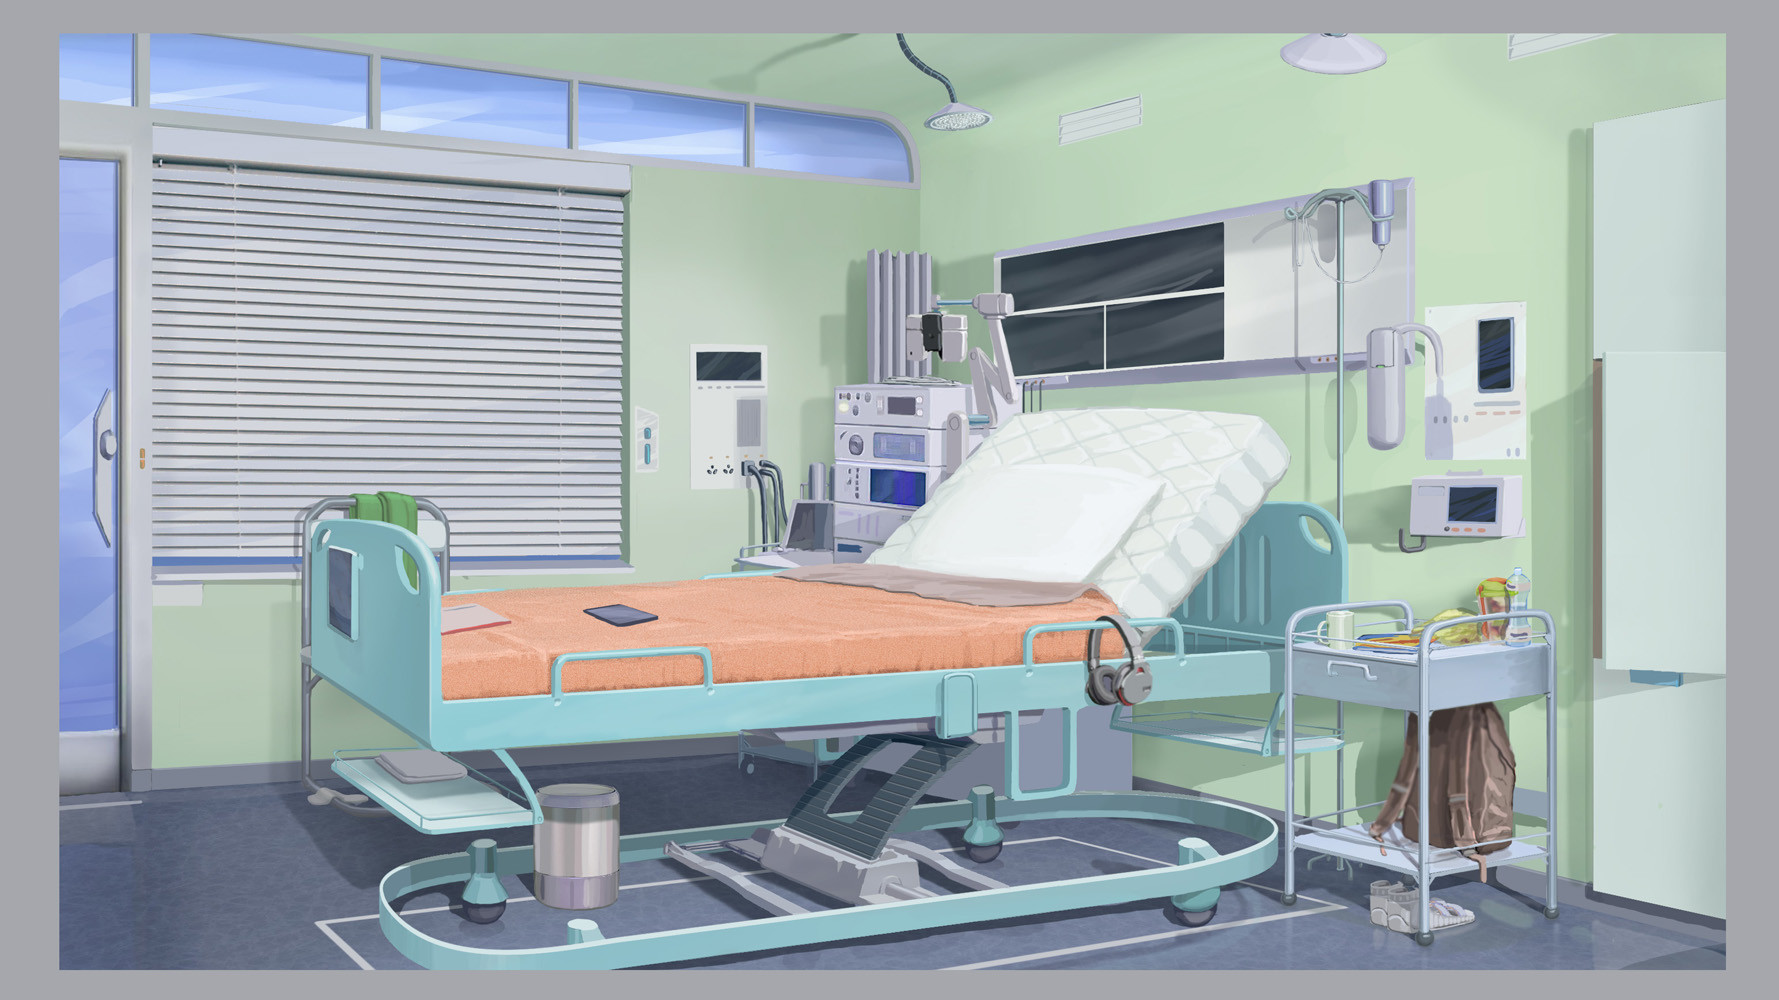 Hospital room 1 by Aleksey Petruk. 